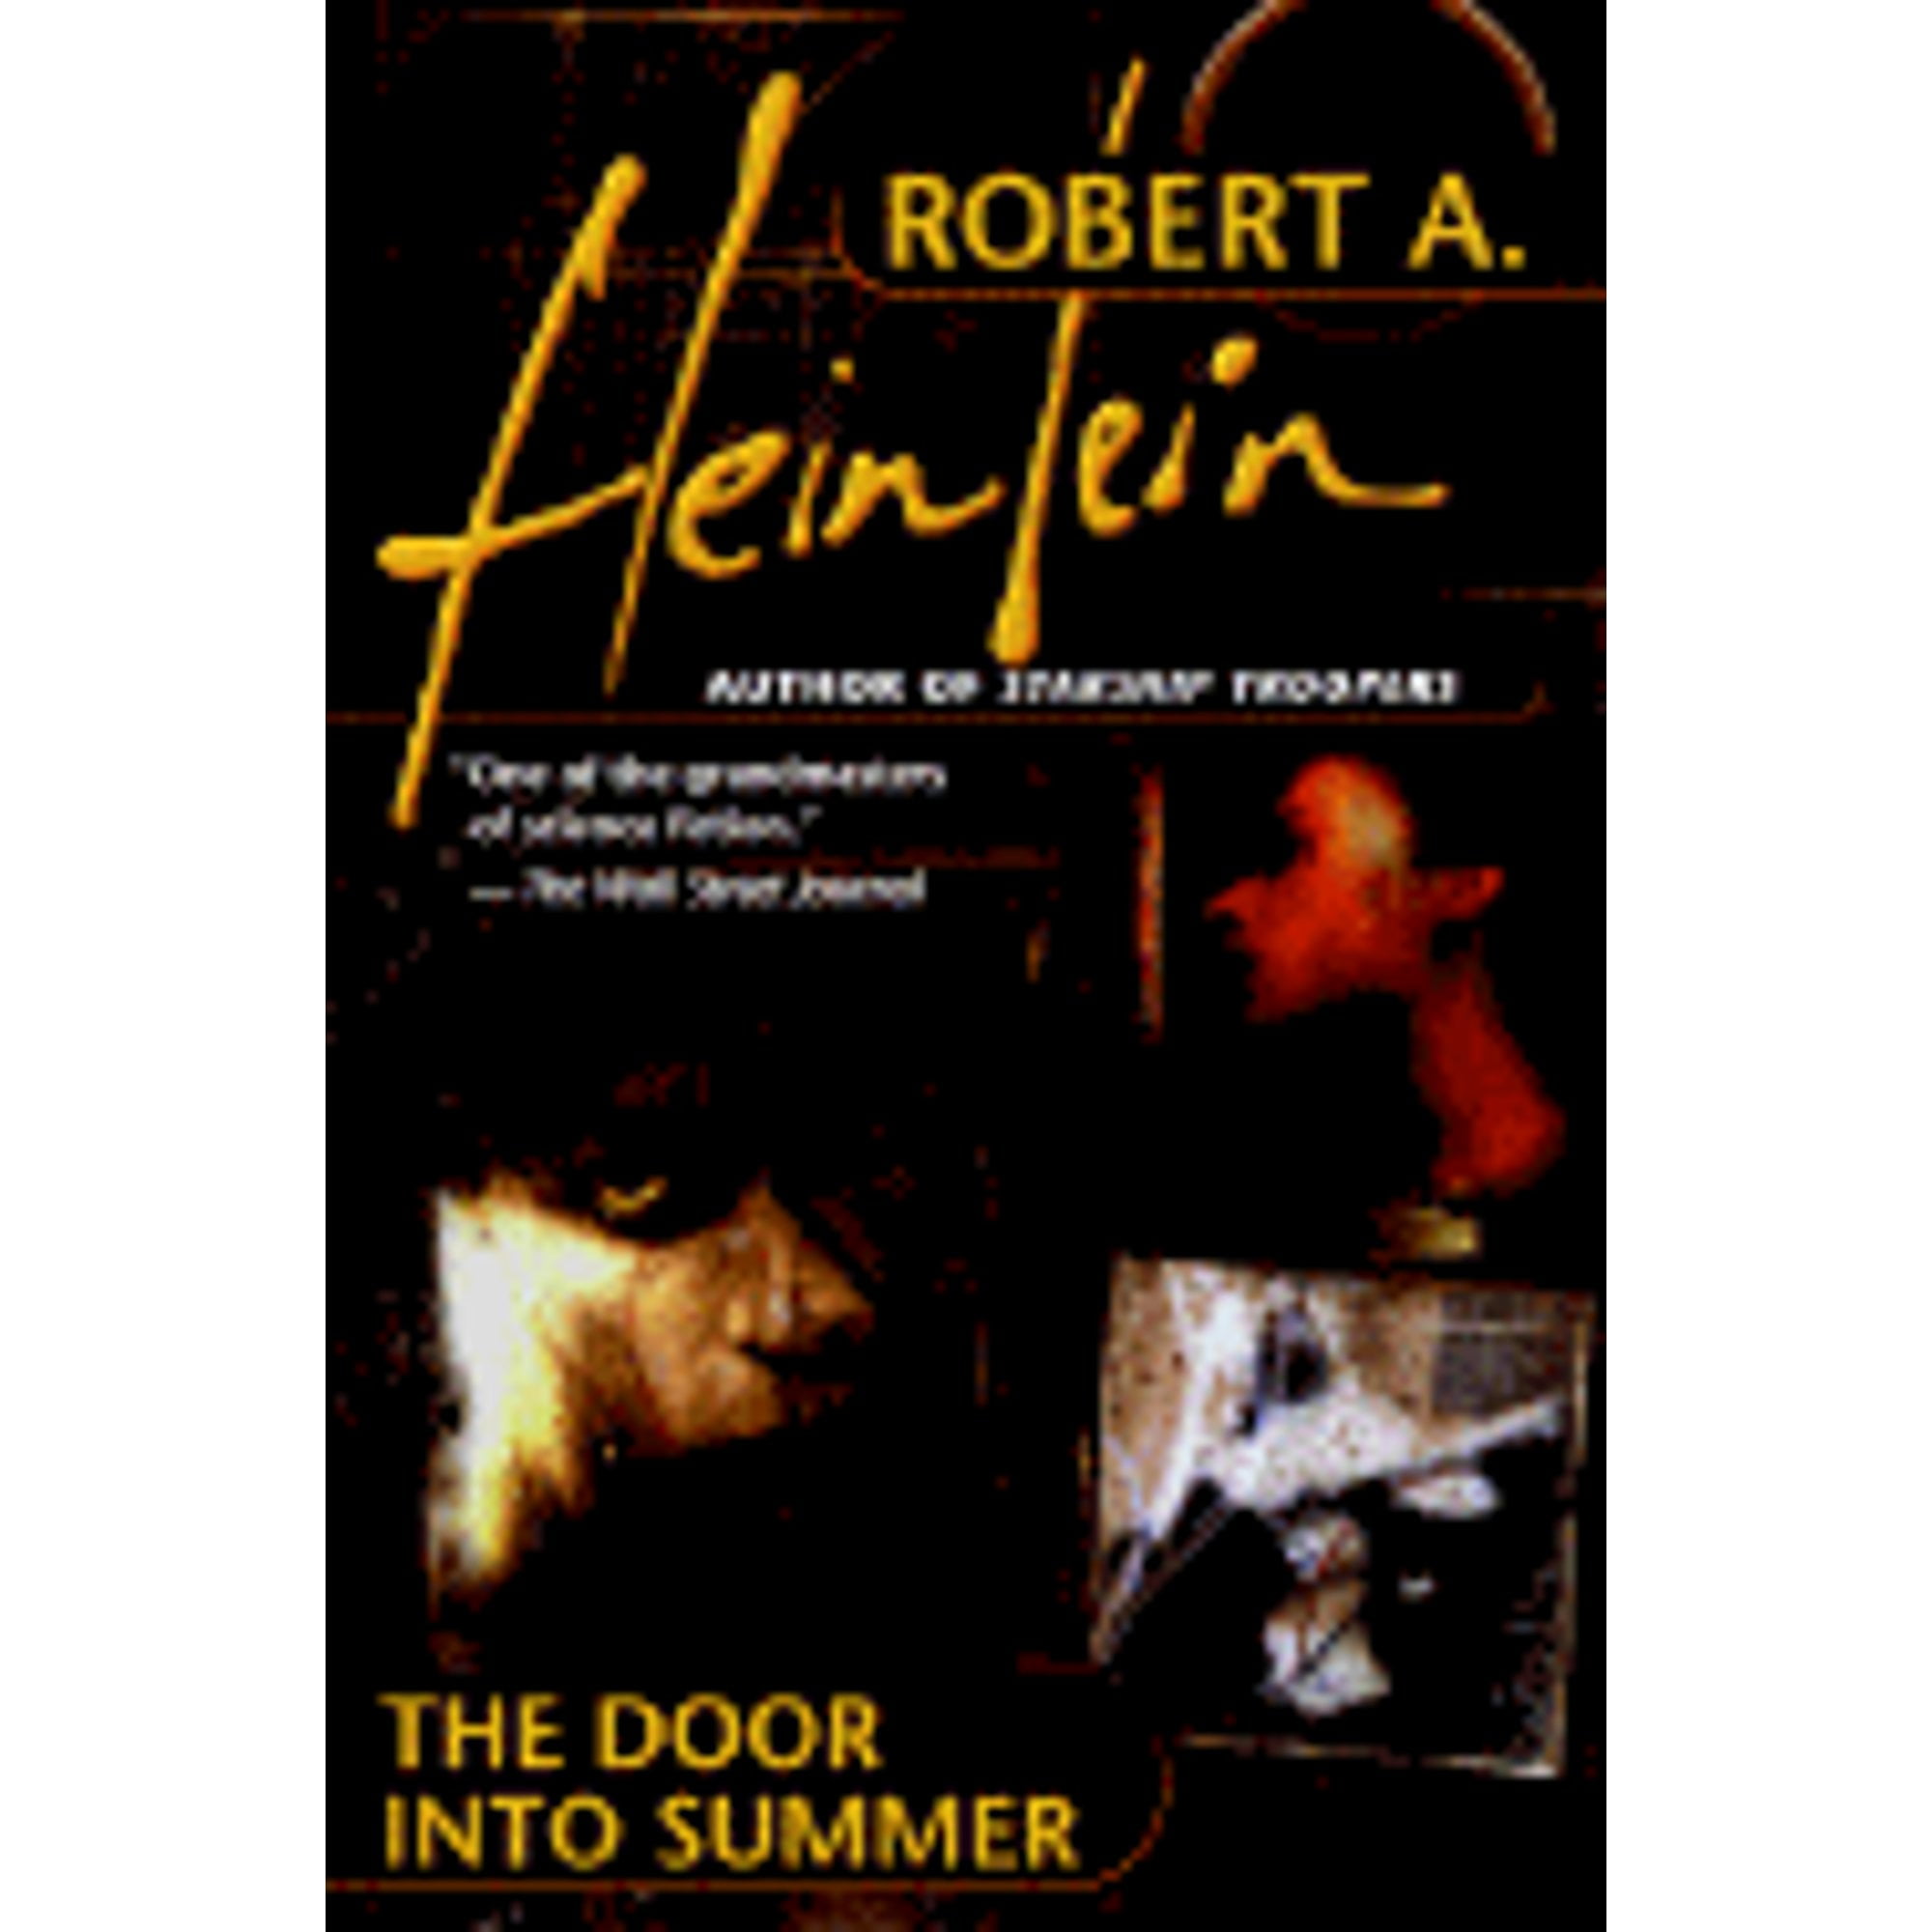  For Us, The Living: A Comedy of Customs: 9780743491549: Robert  A. Heinlein, Spider Robinson, Robert James: Books